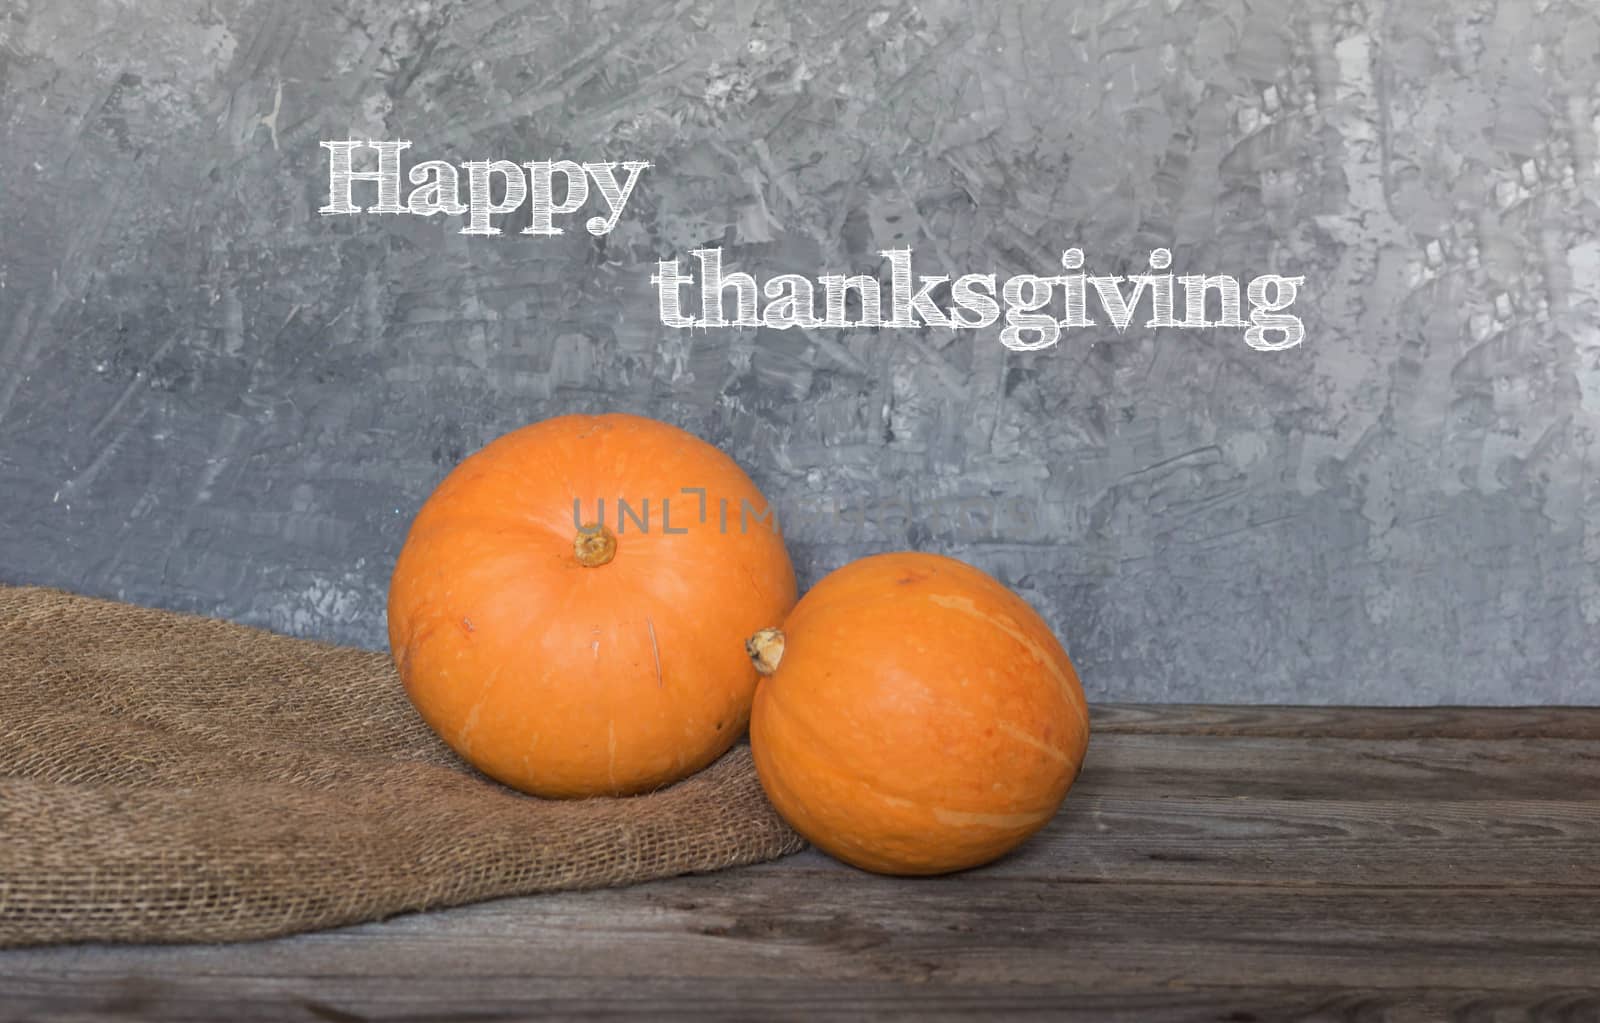 Happy Thanksgiving greeting text and colorful pumpkins  by galinasharapova